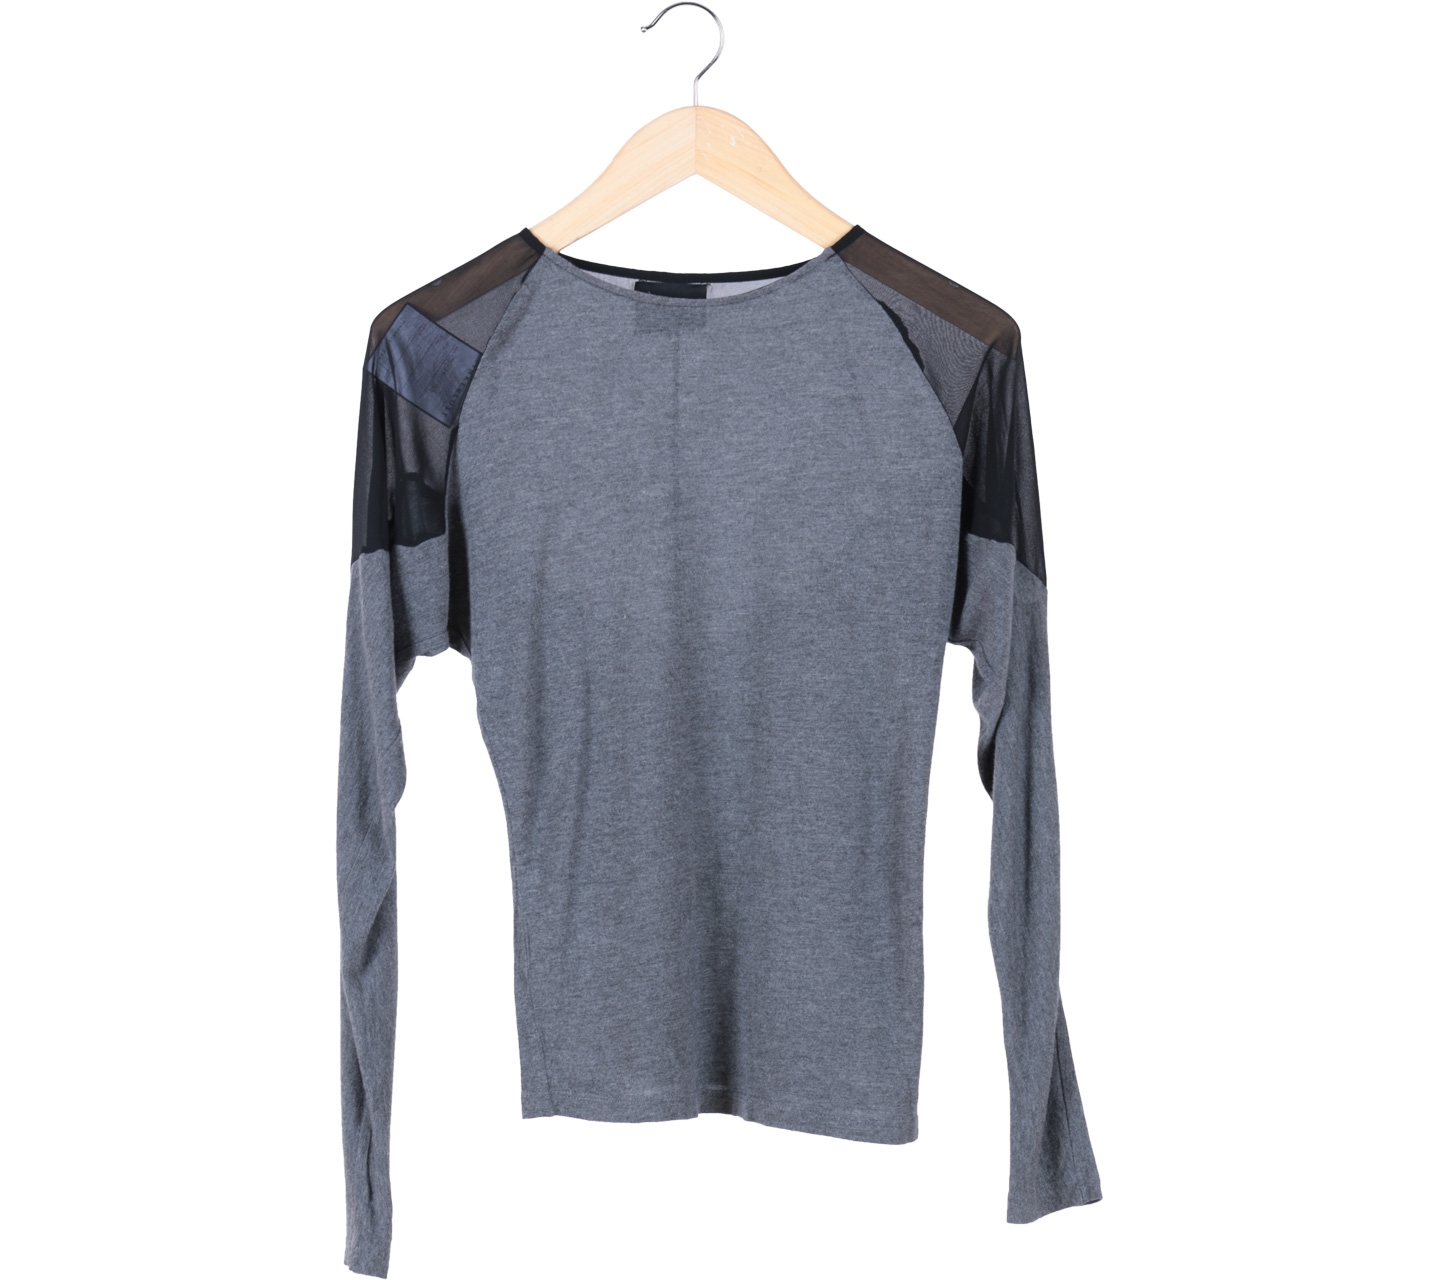 Zara Grey And Black Sheer Insert T-Shirt